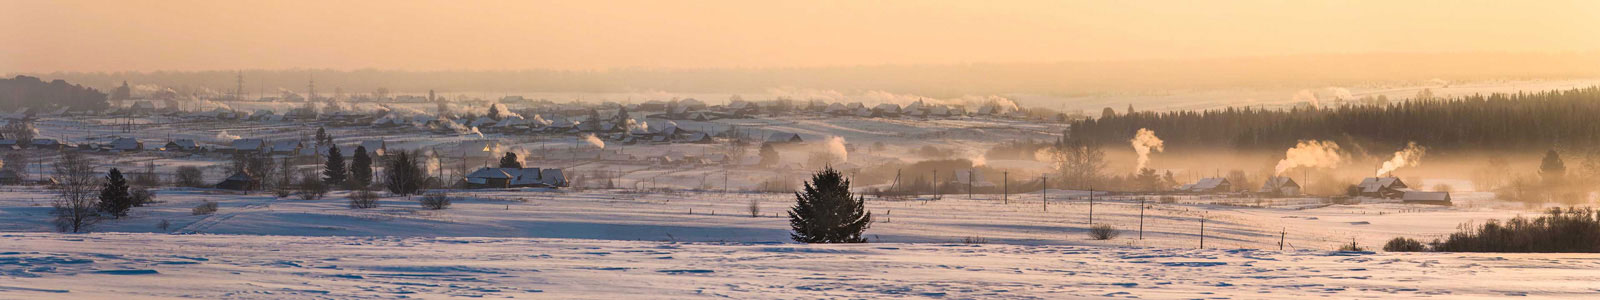 №4377 - Зимняя панорама, Сибирь